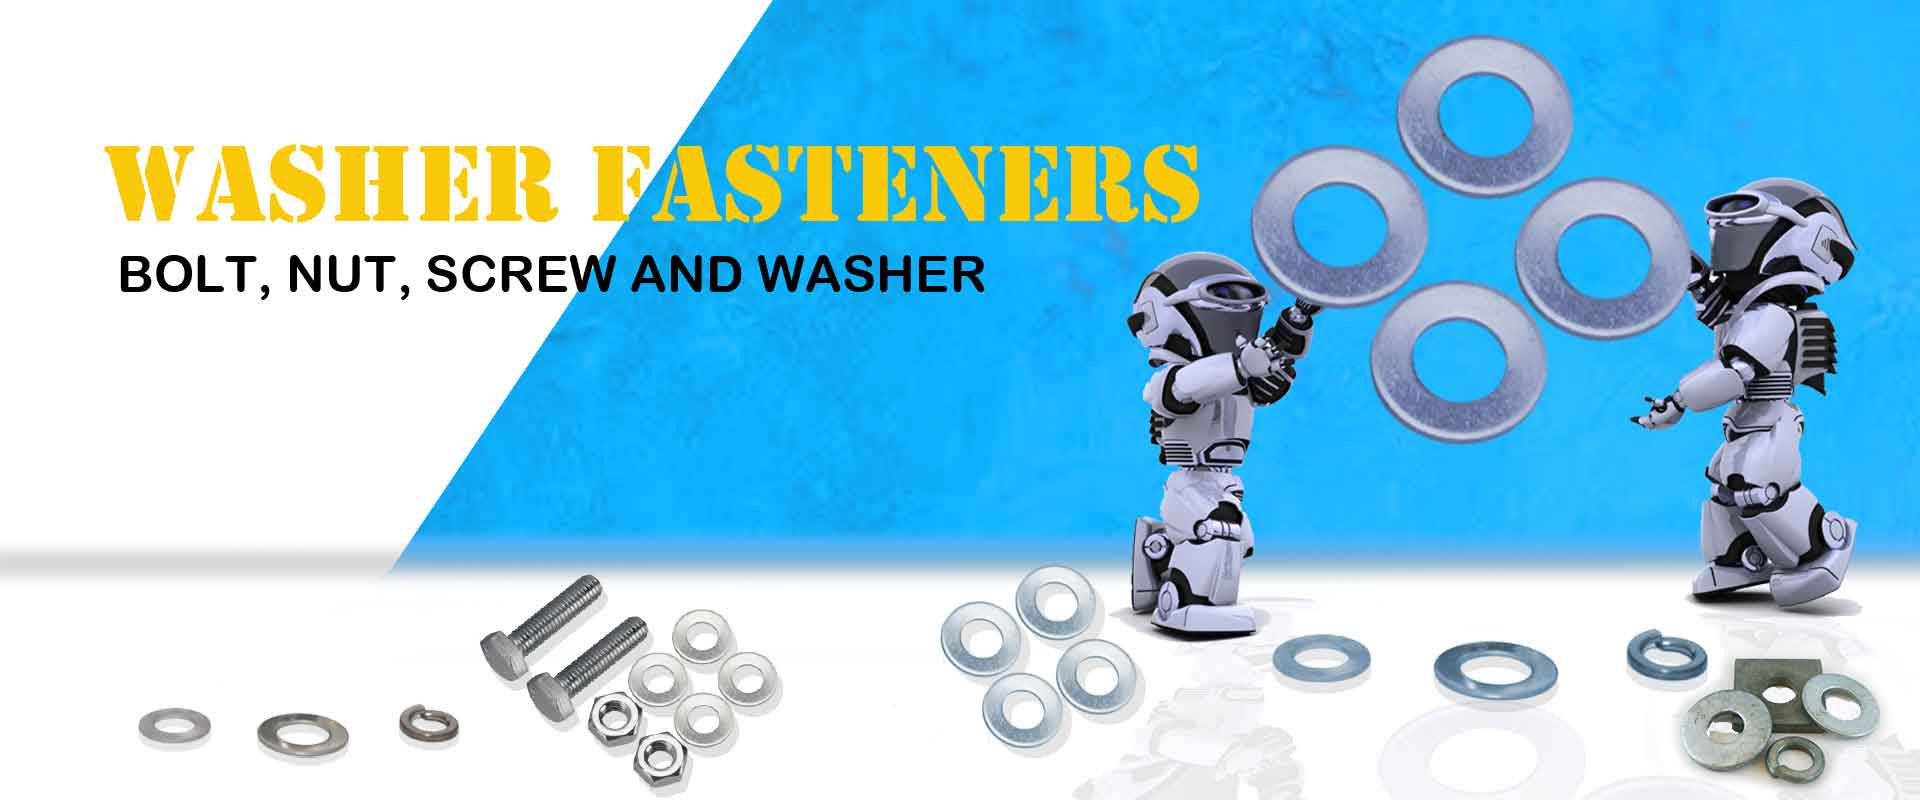 Washer Fasteners